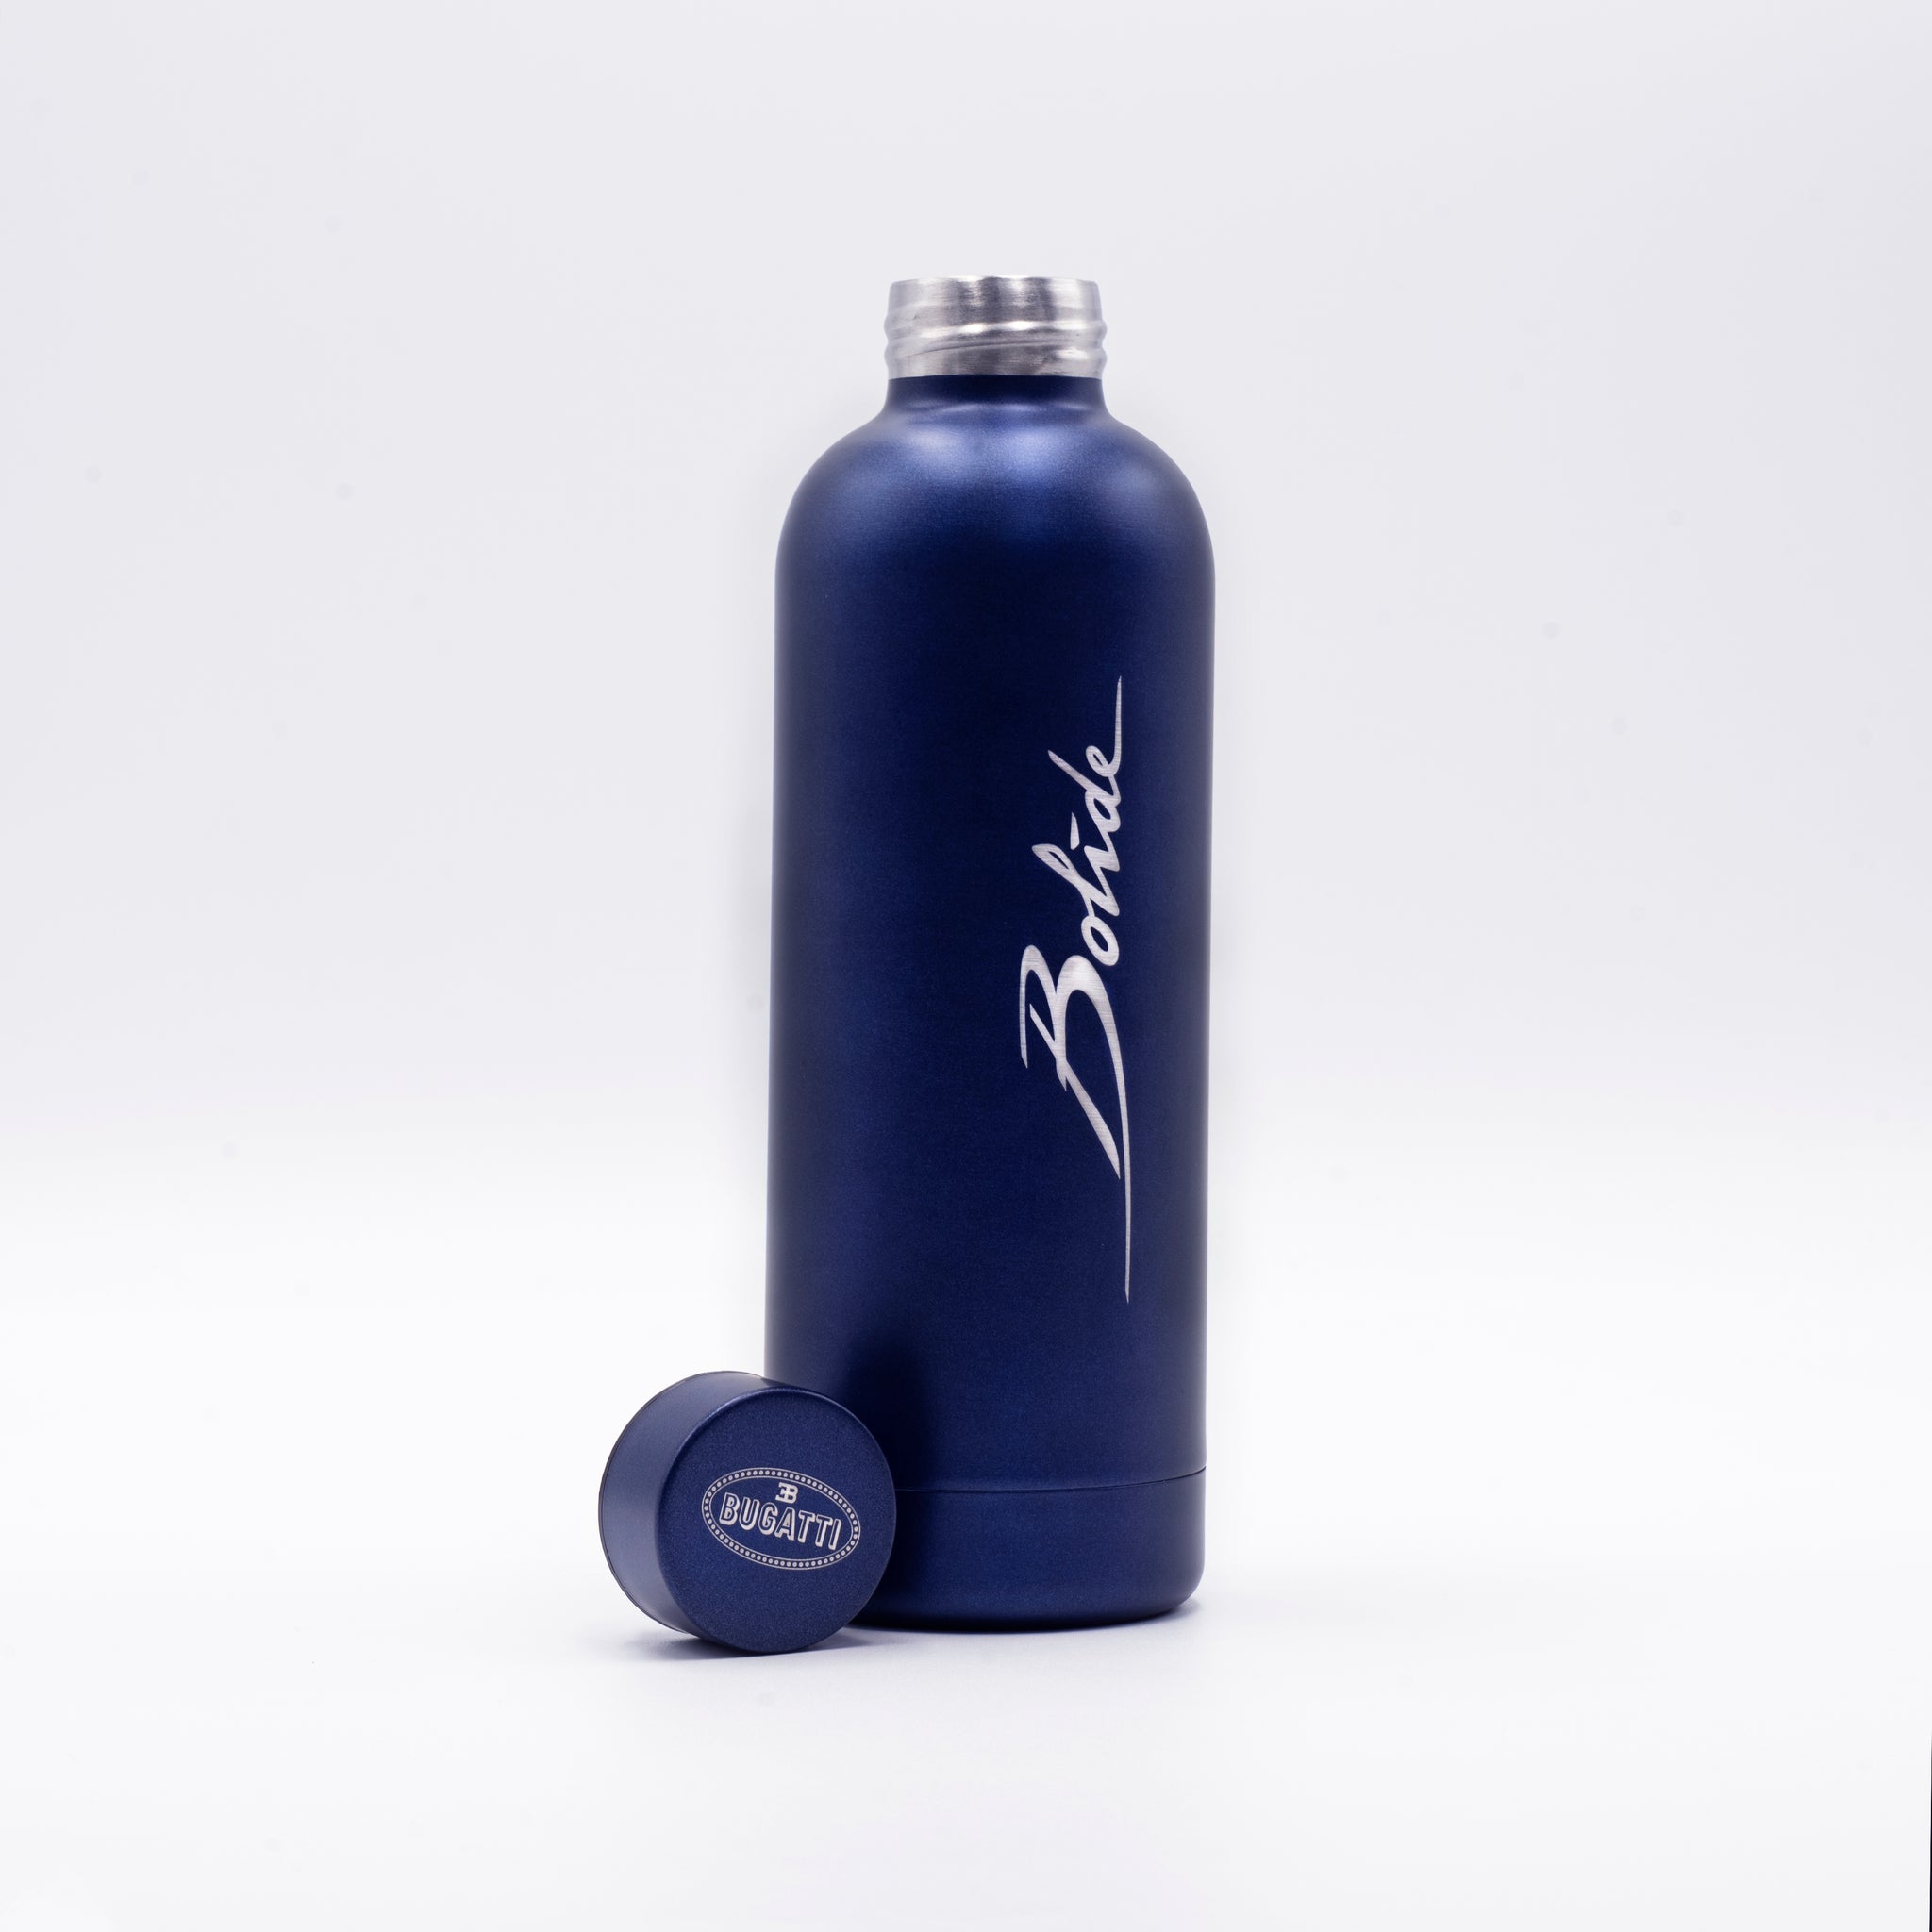 Bolide Bugatti bottle Official Merchandising Water – Bugatti Store blue |